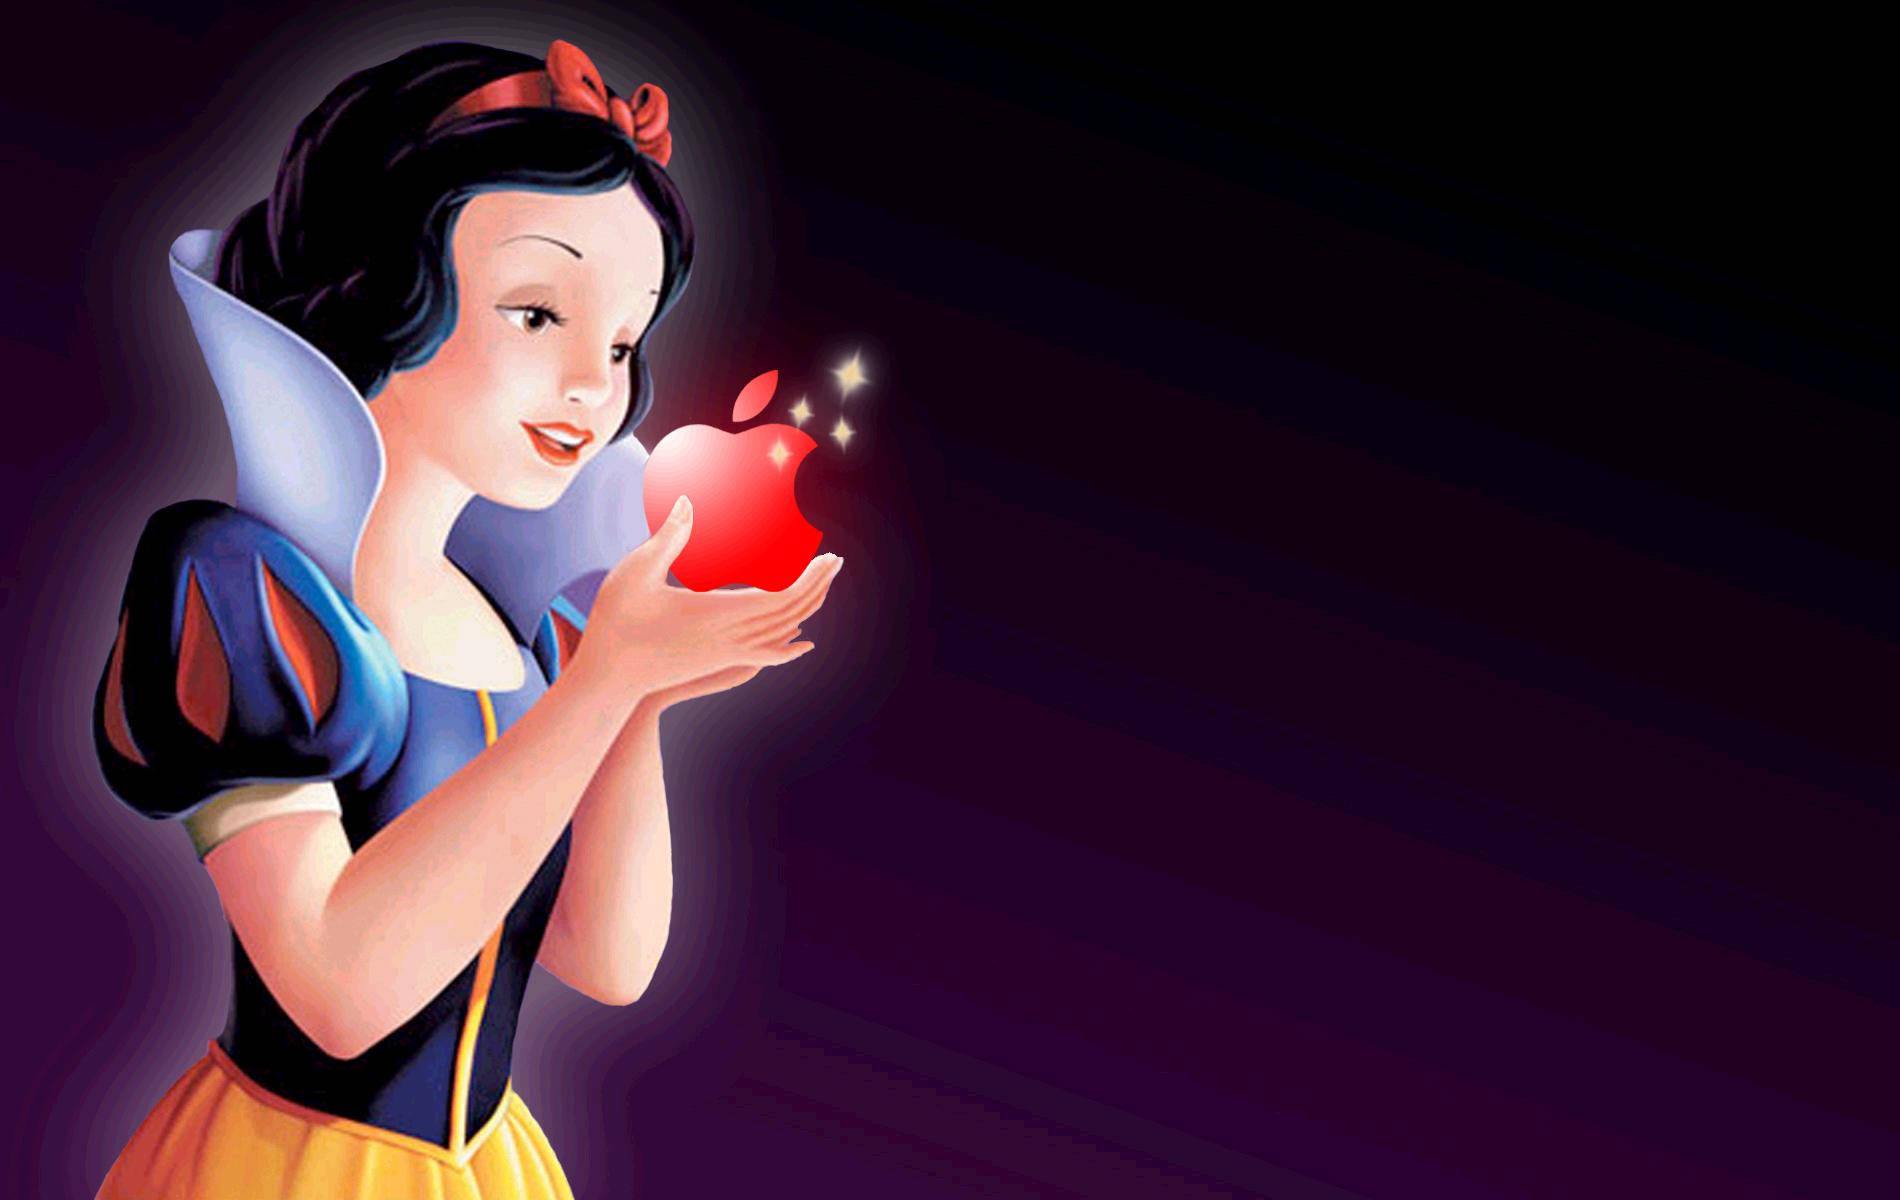 Snow White Graphic Poster Wallpaper